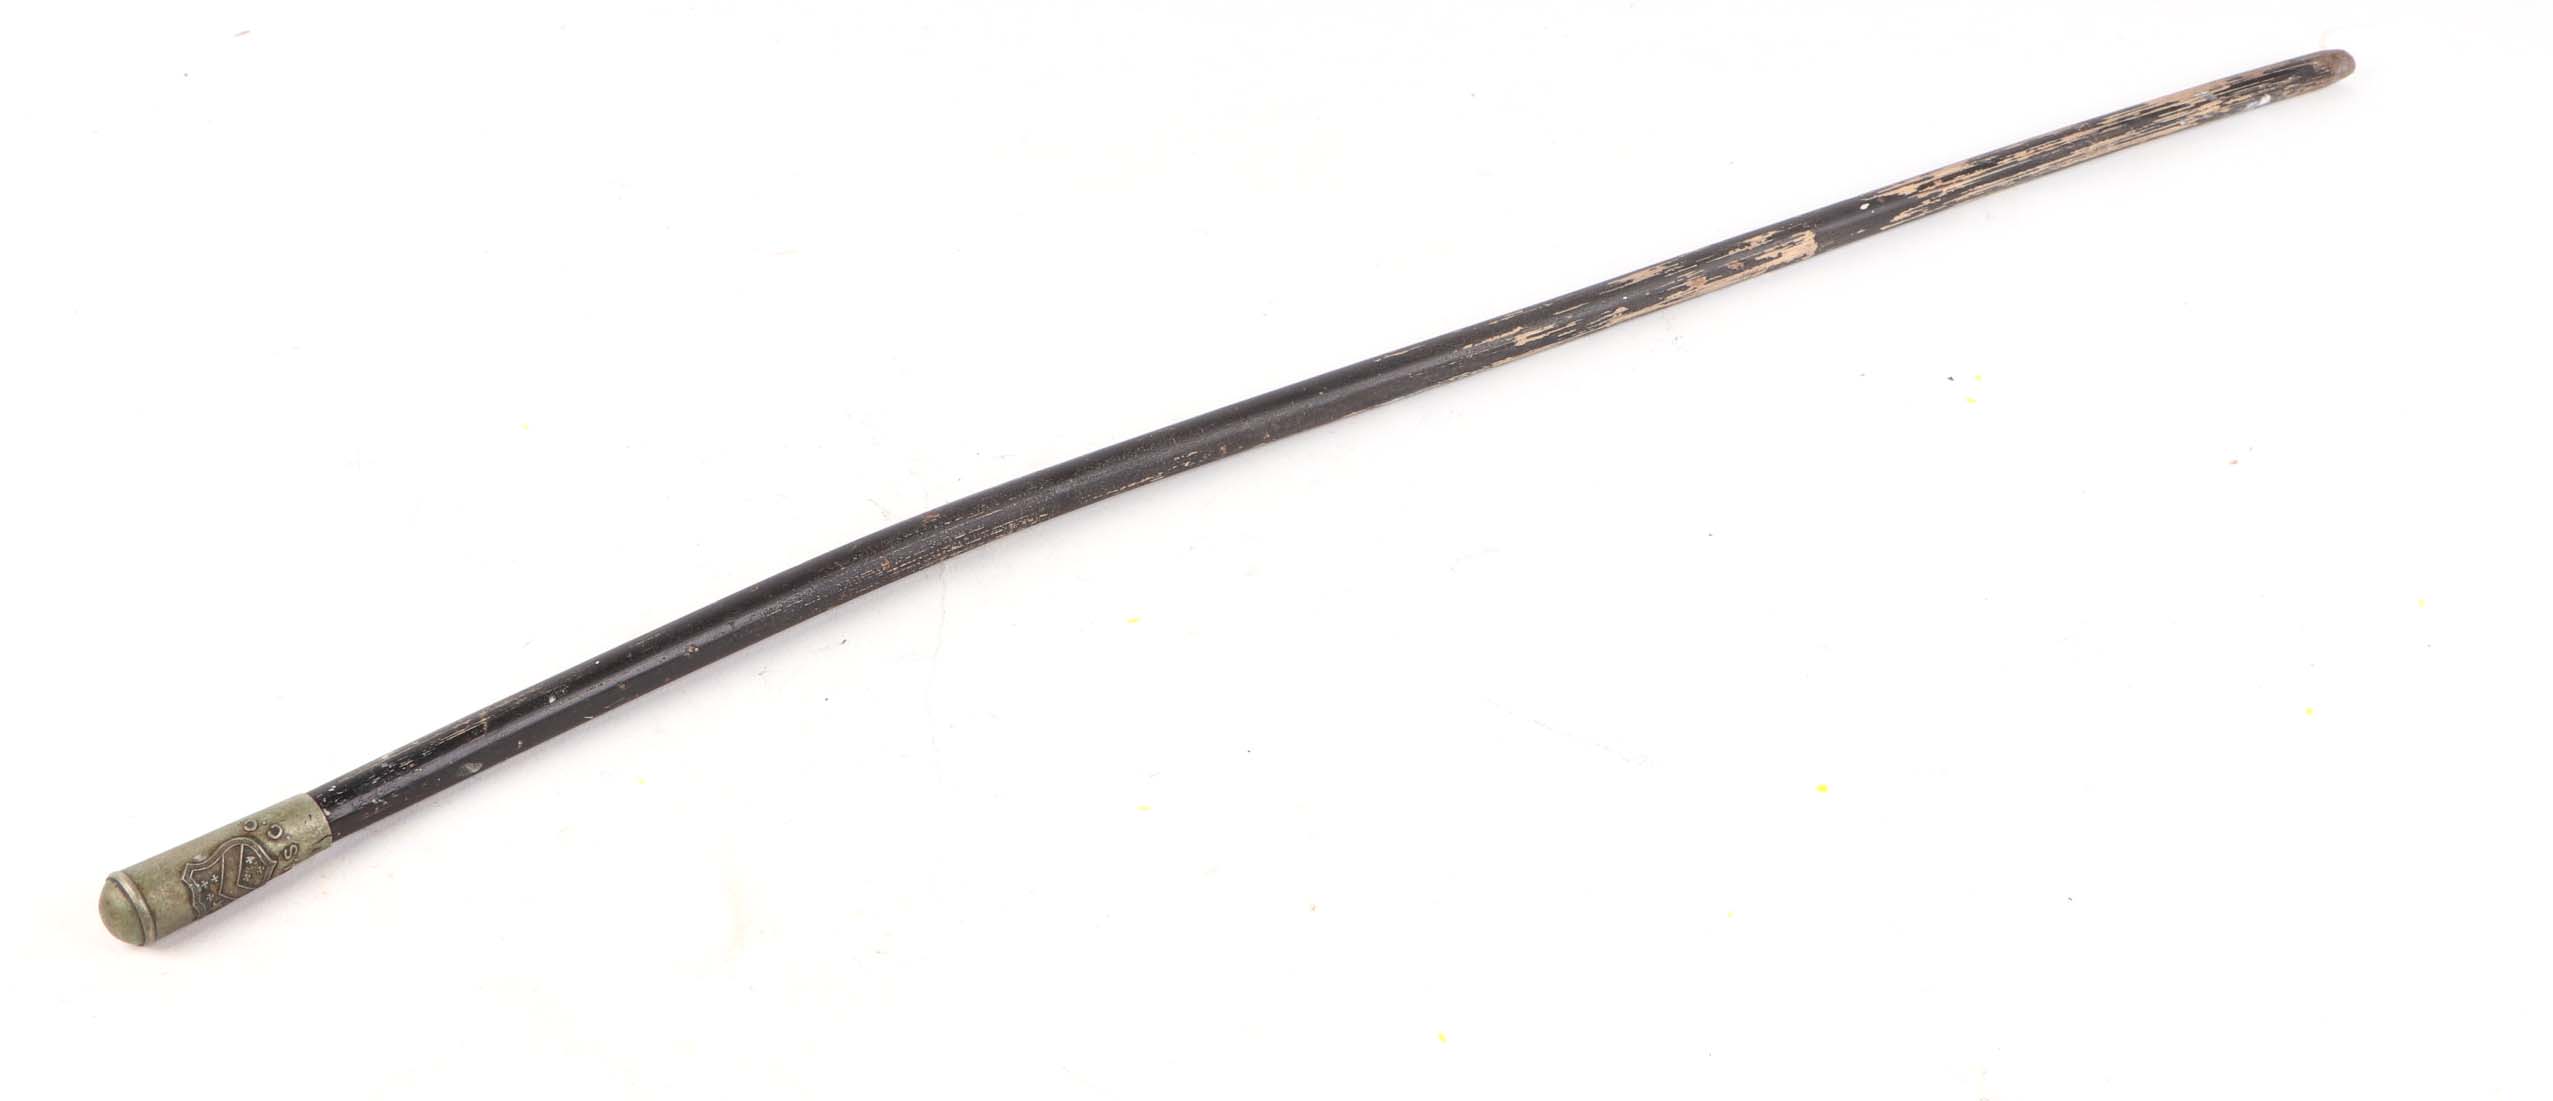 A L.U.S.C.C swagger stick, 69cm long. - Image 2 of 2